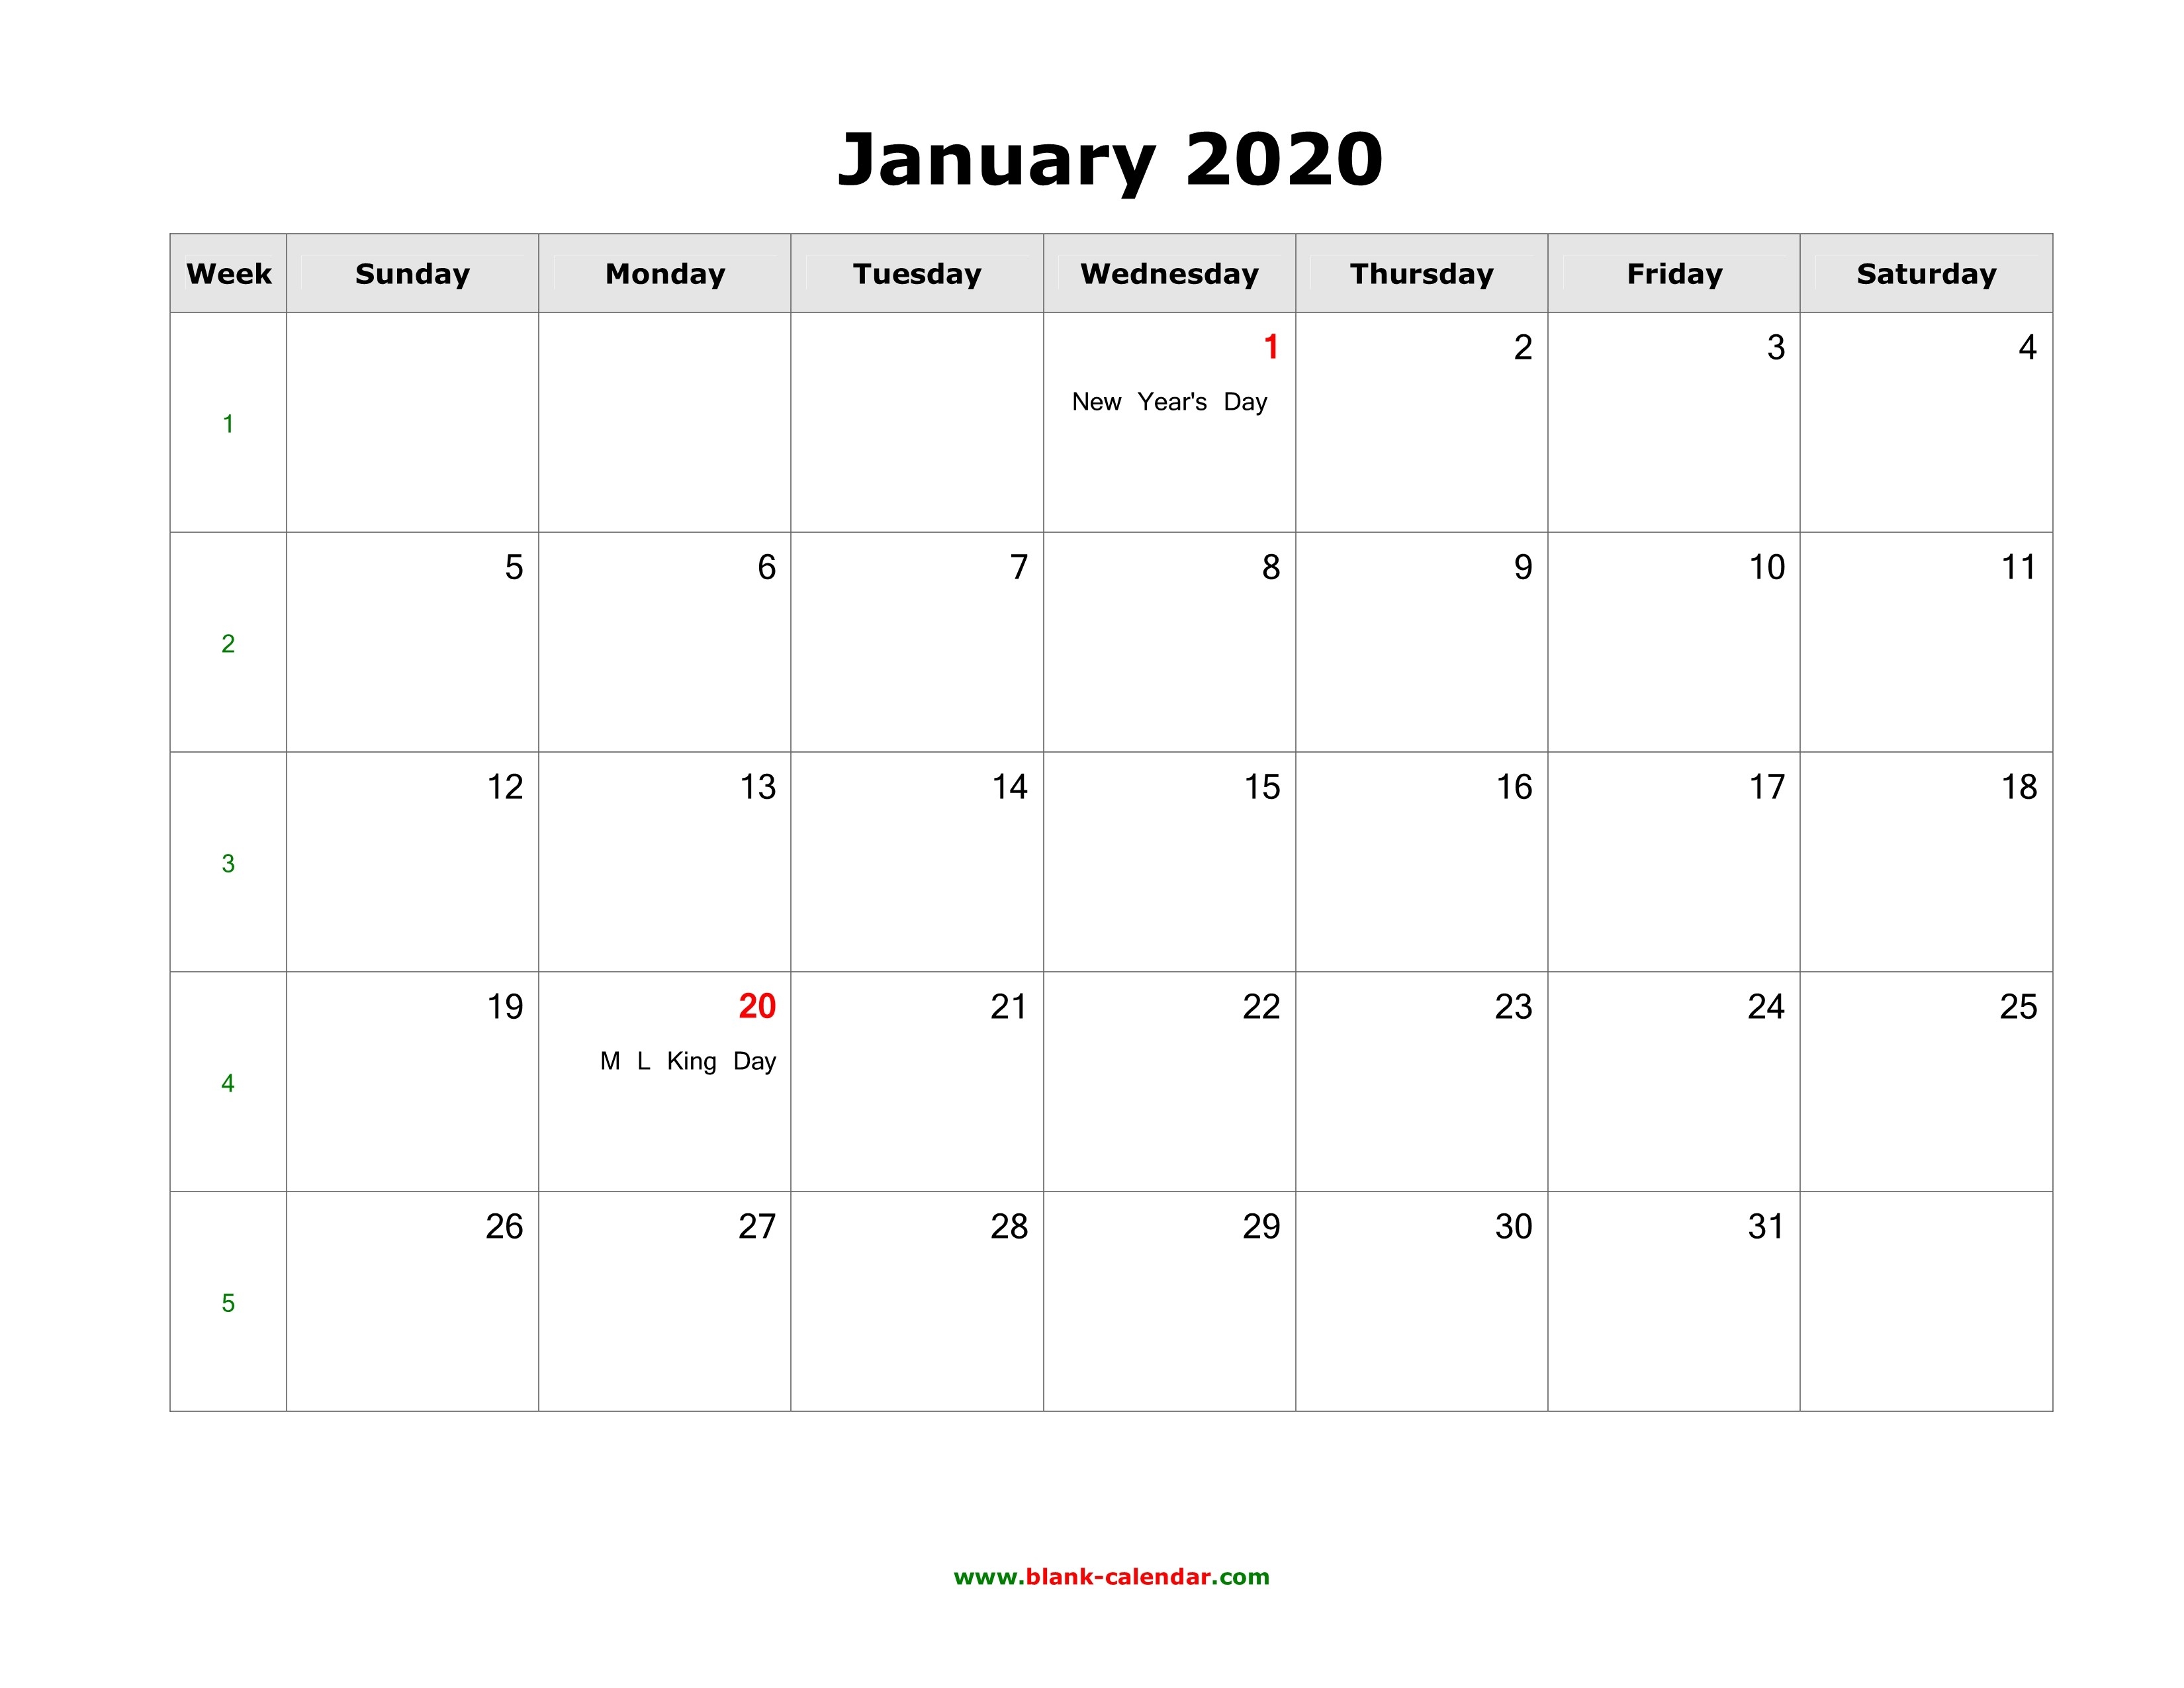 January 2020 Blank Calendar | Free Download Calendar Templates-Editable January 2020 Calendar